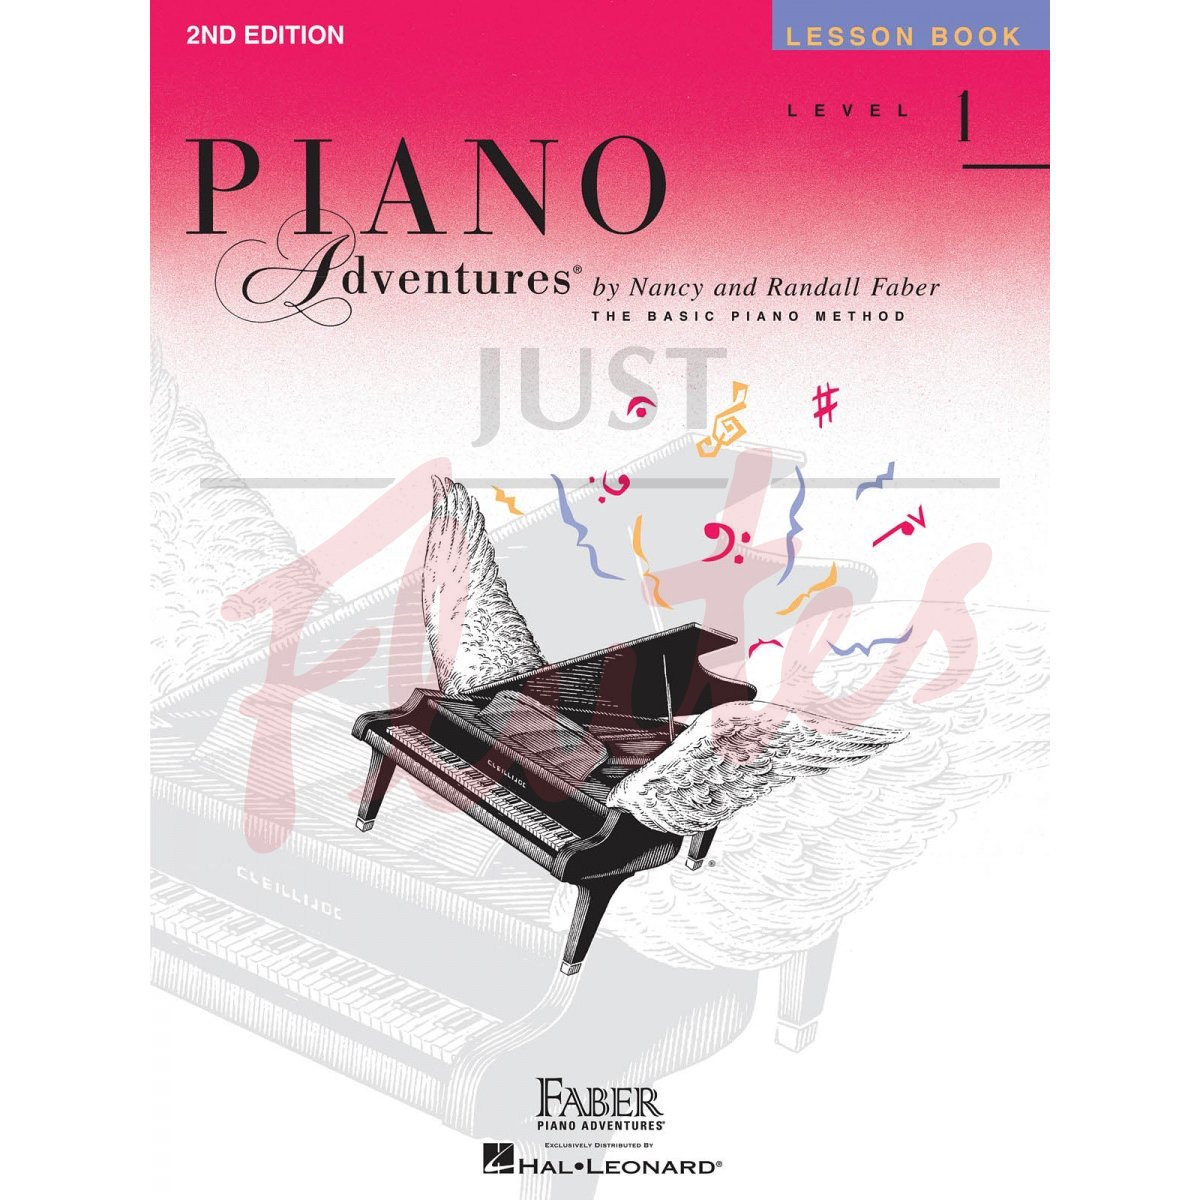 Piano Adventures - Lesson Book Level 1